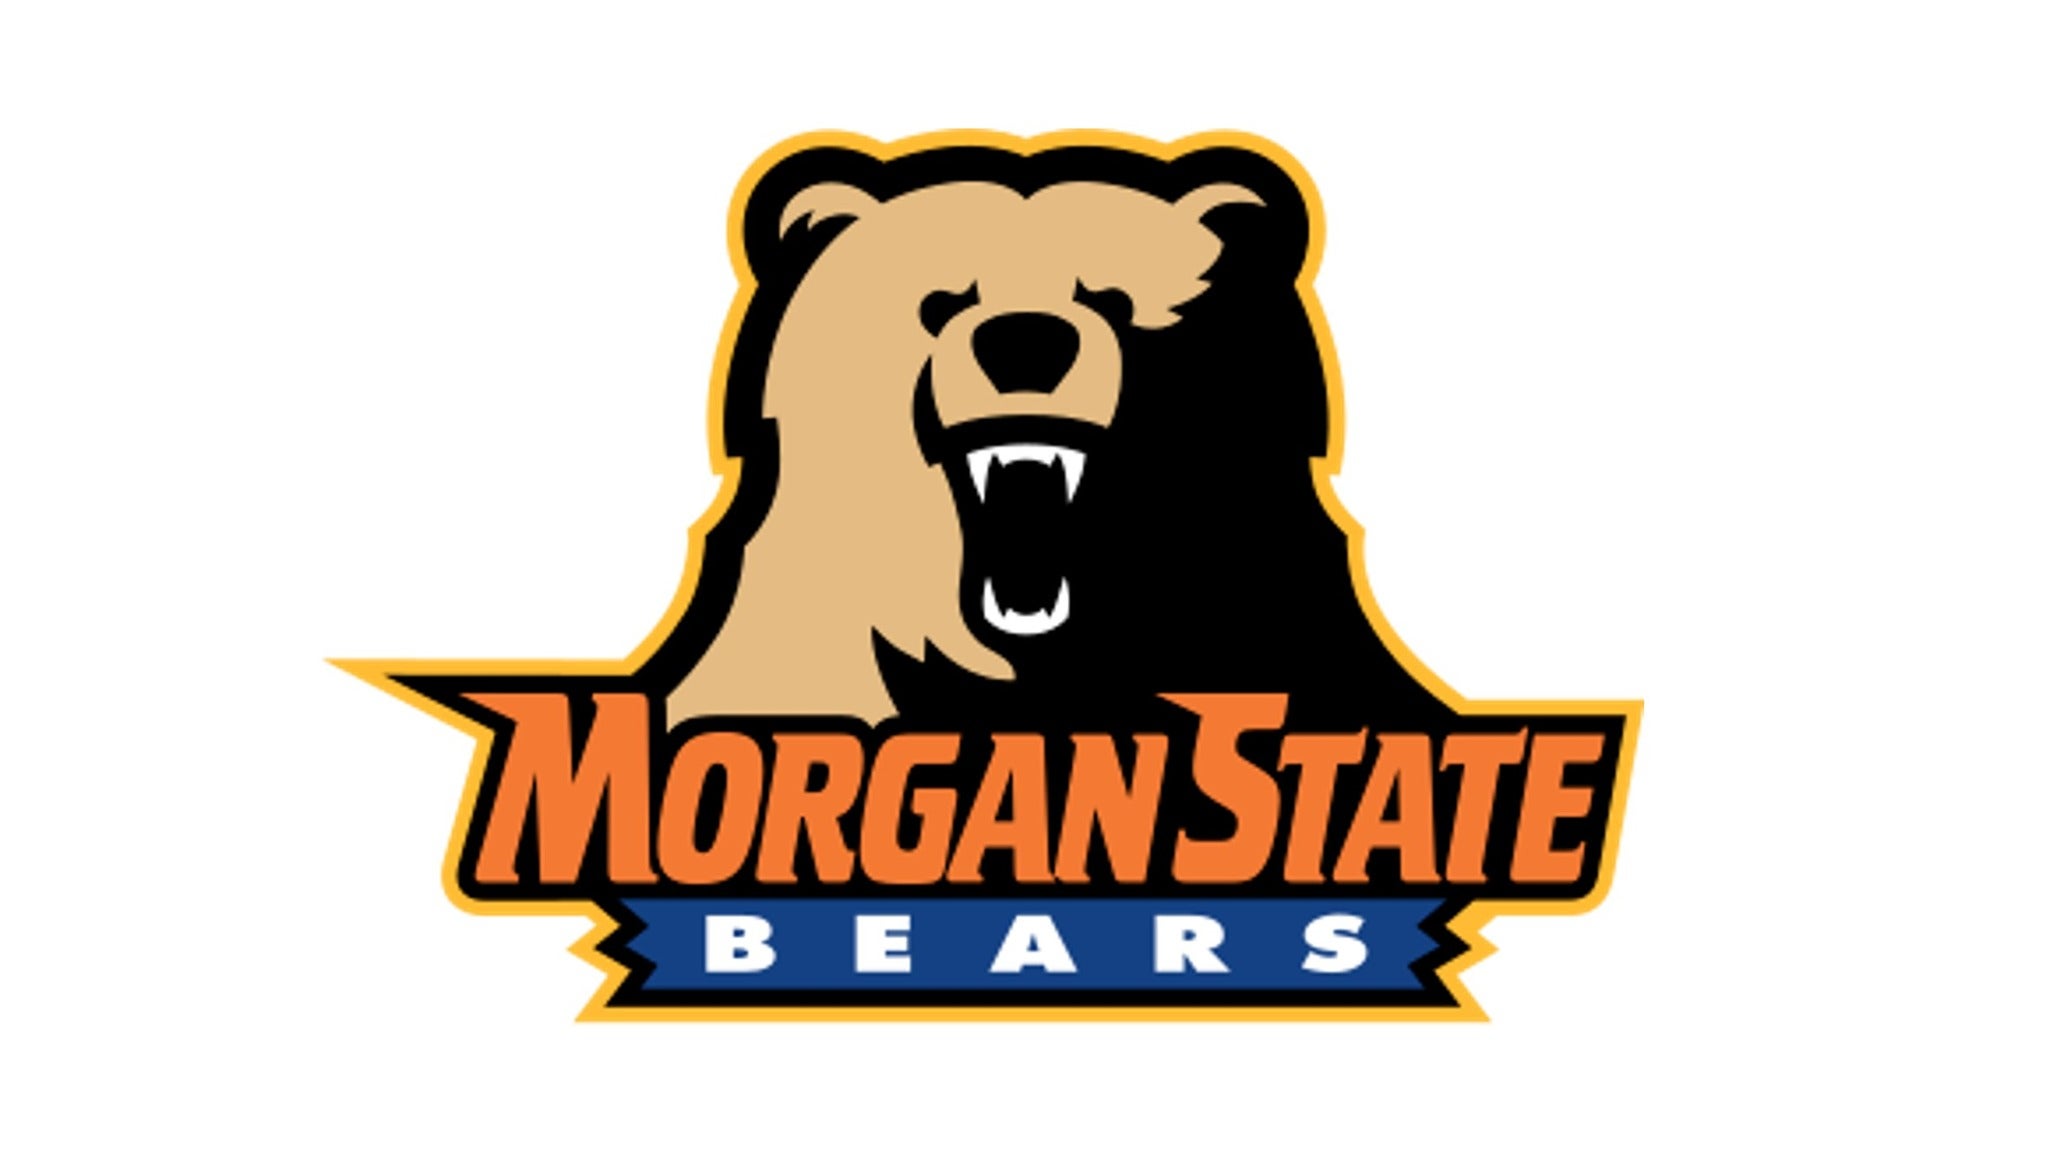 Morgan State Bears Football presale information on freepresalepasswords.com